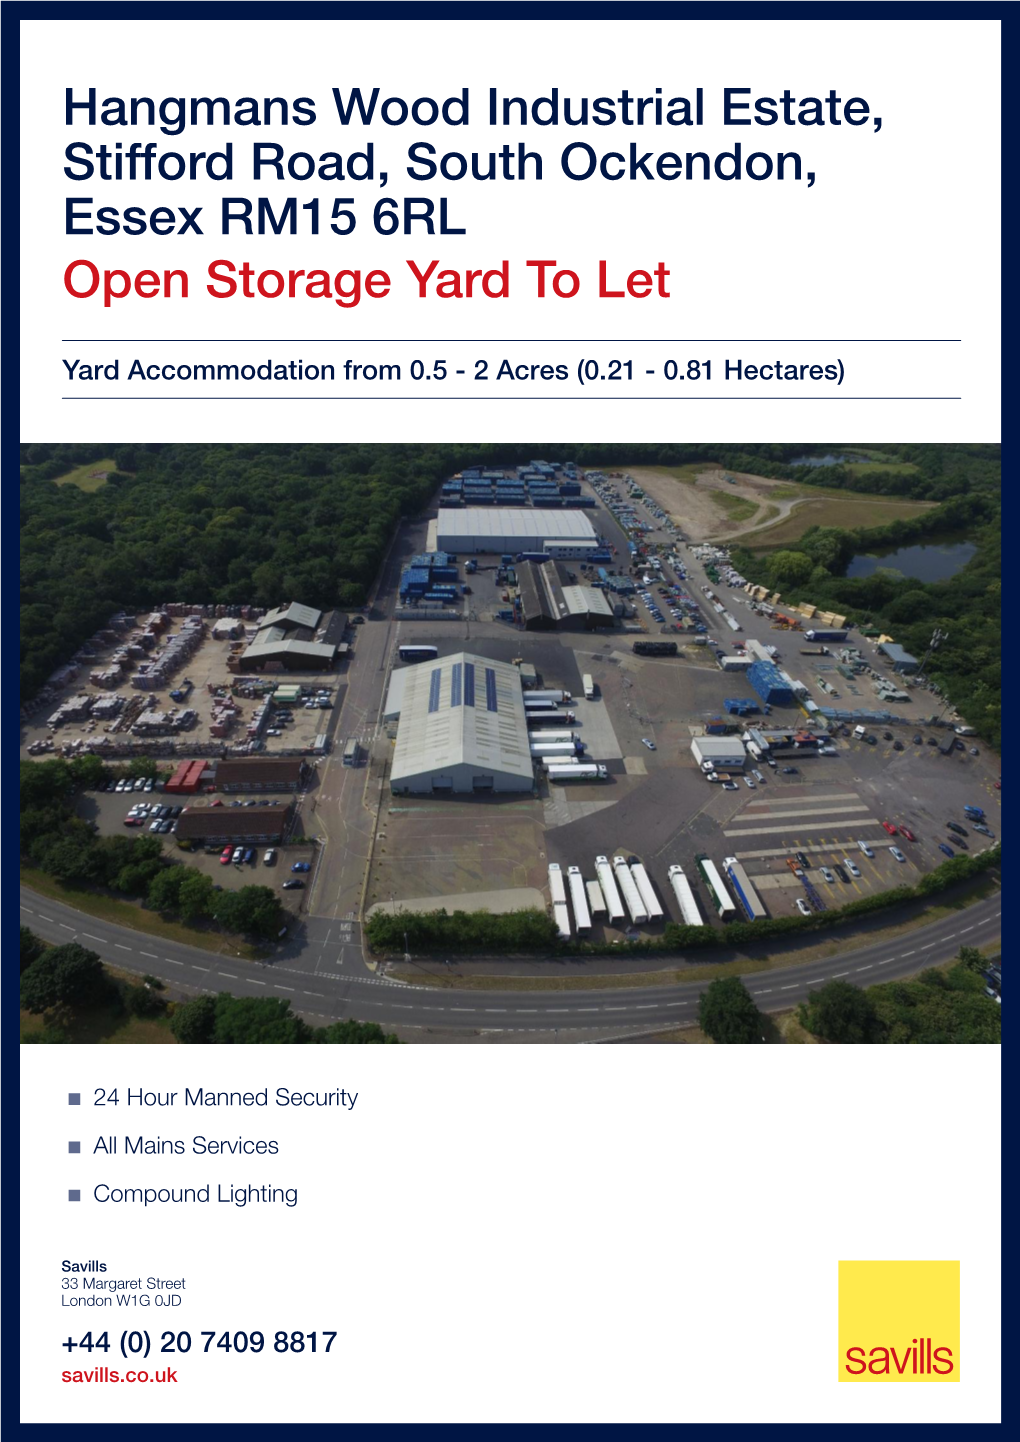 Hangmans Wood Industrial Estate, Stifford Road, South Ockendon, Essex RM15 6RL Open Storage Yard to Let